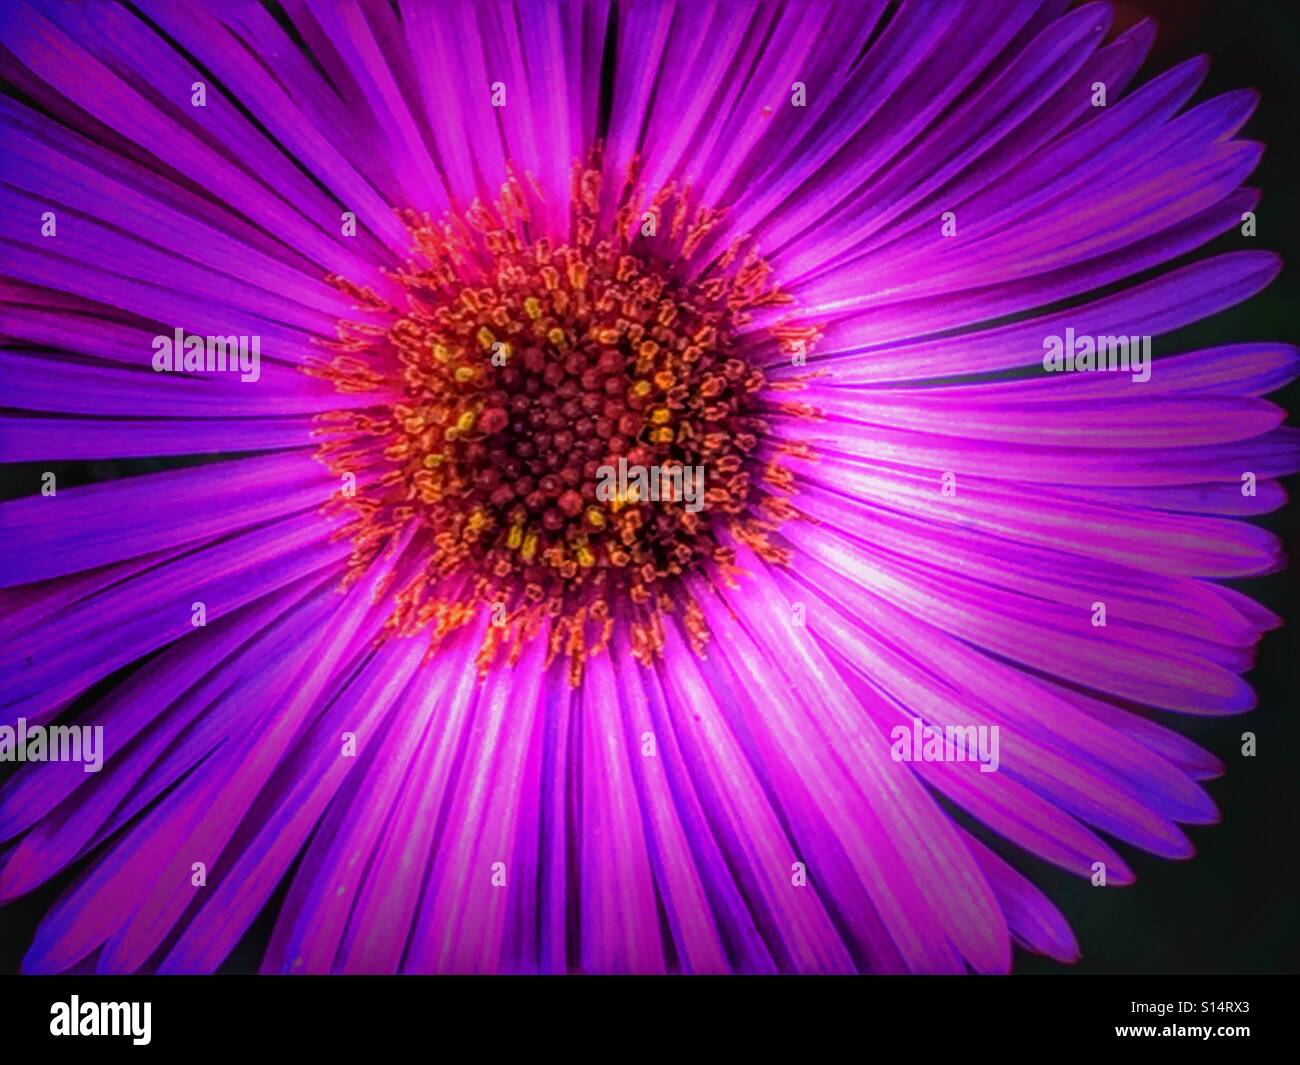 Vibrant pink and purple daisy Stock Photo